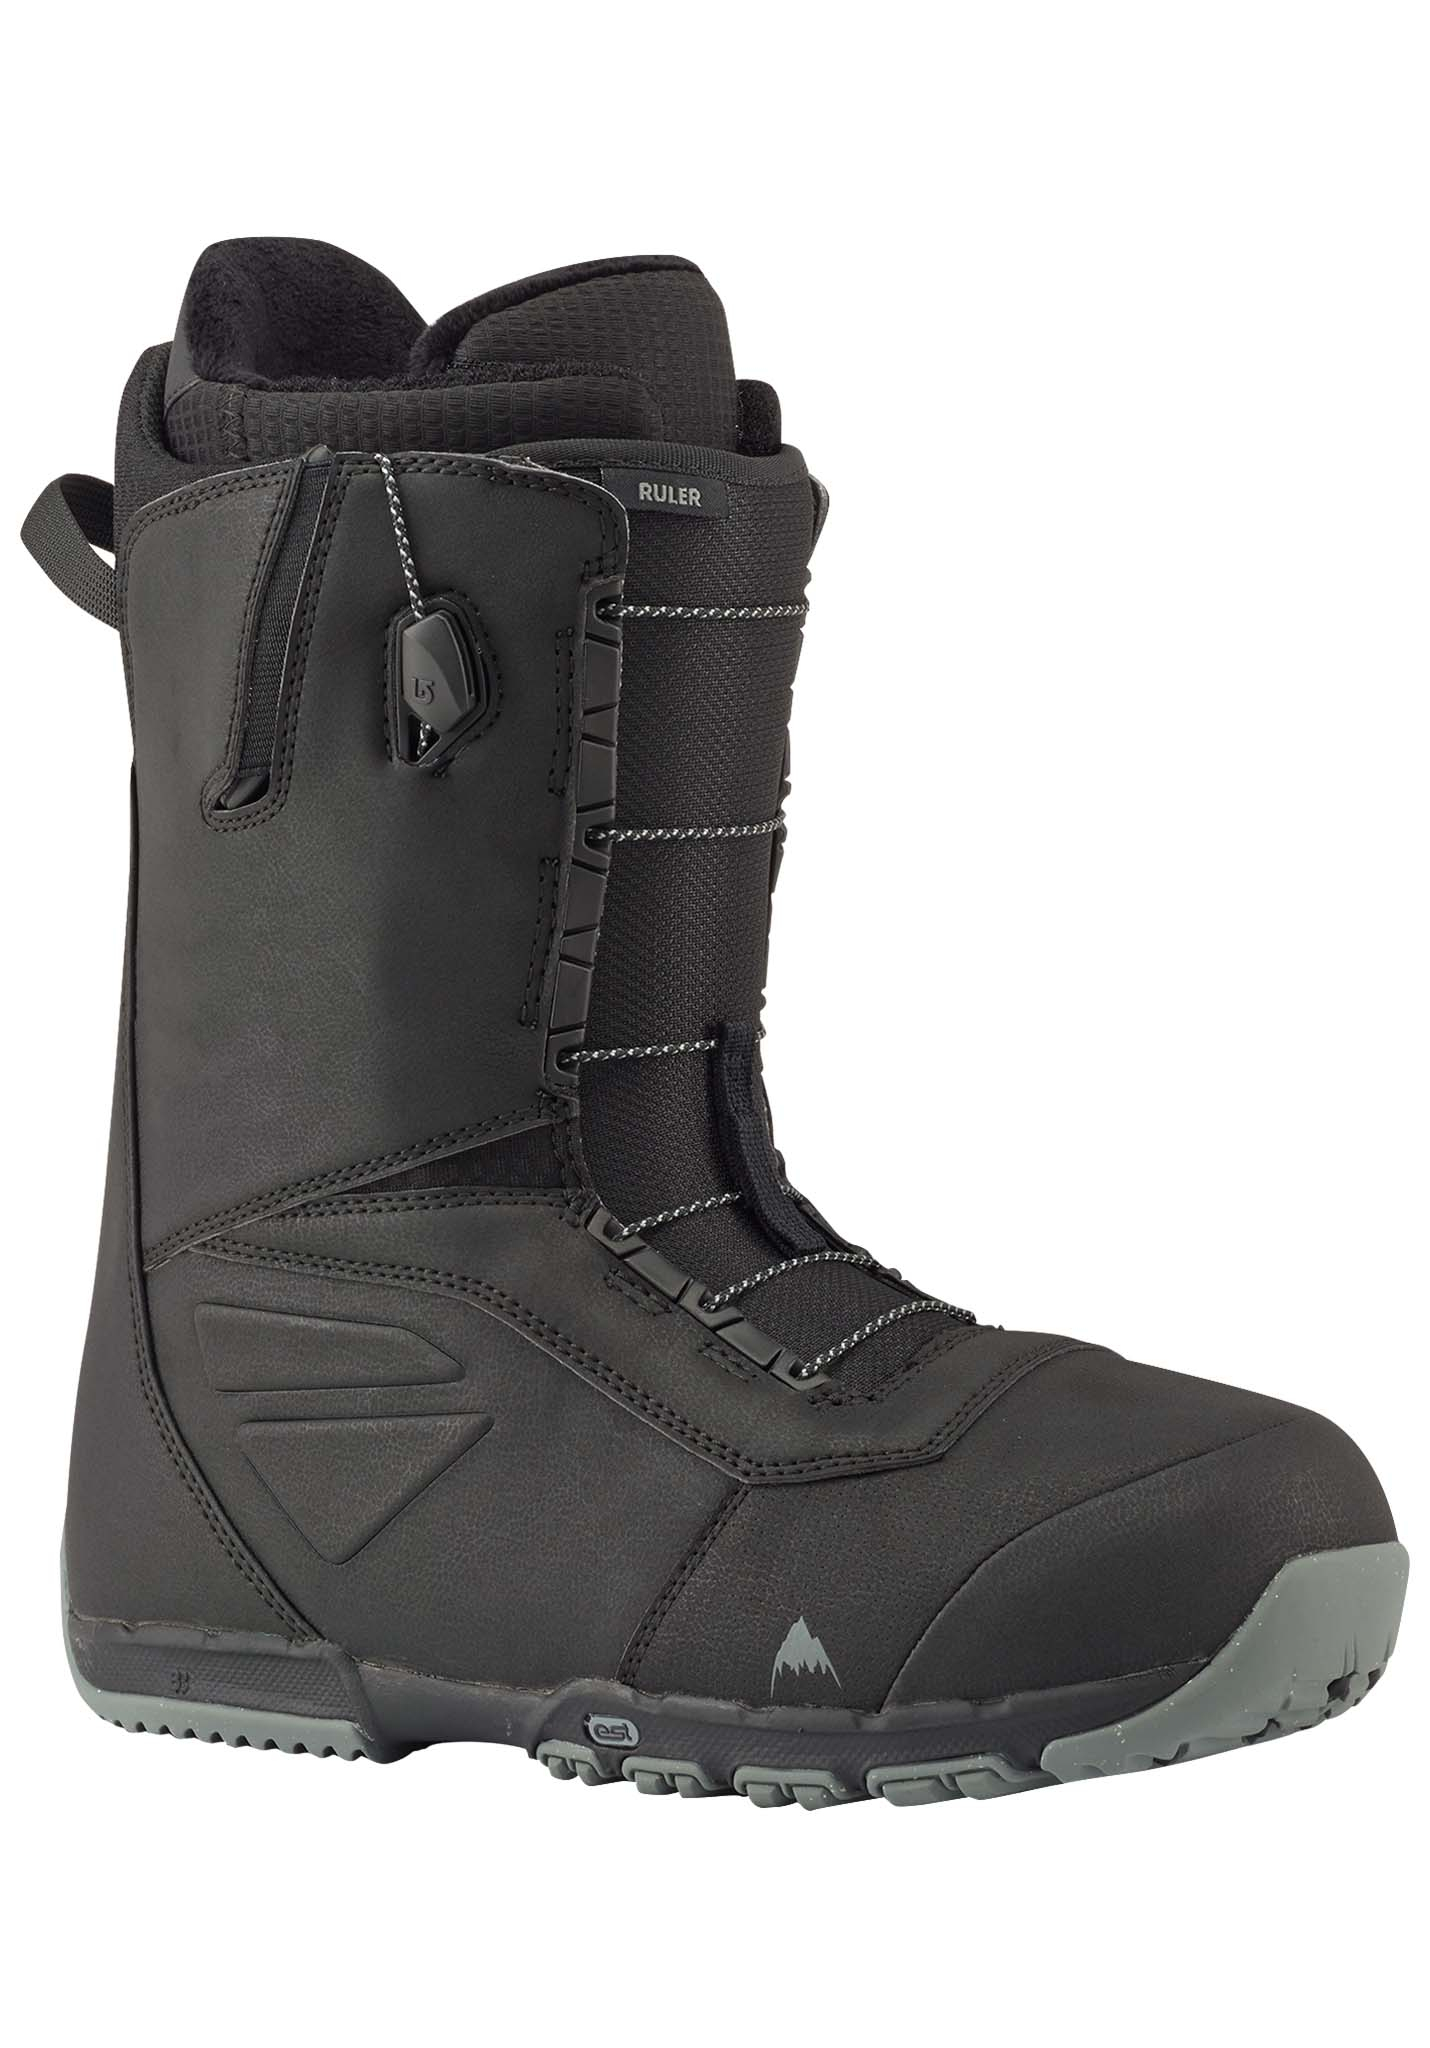 Burton Ruler Wide Snowboard Boots black 48